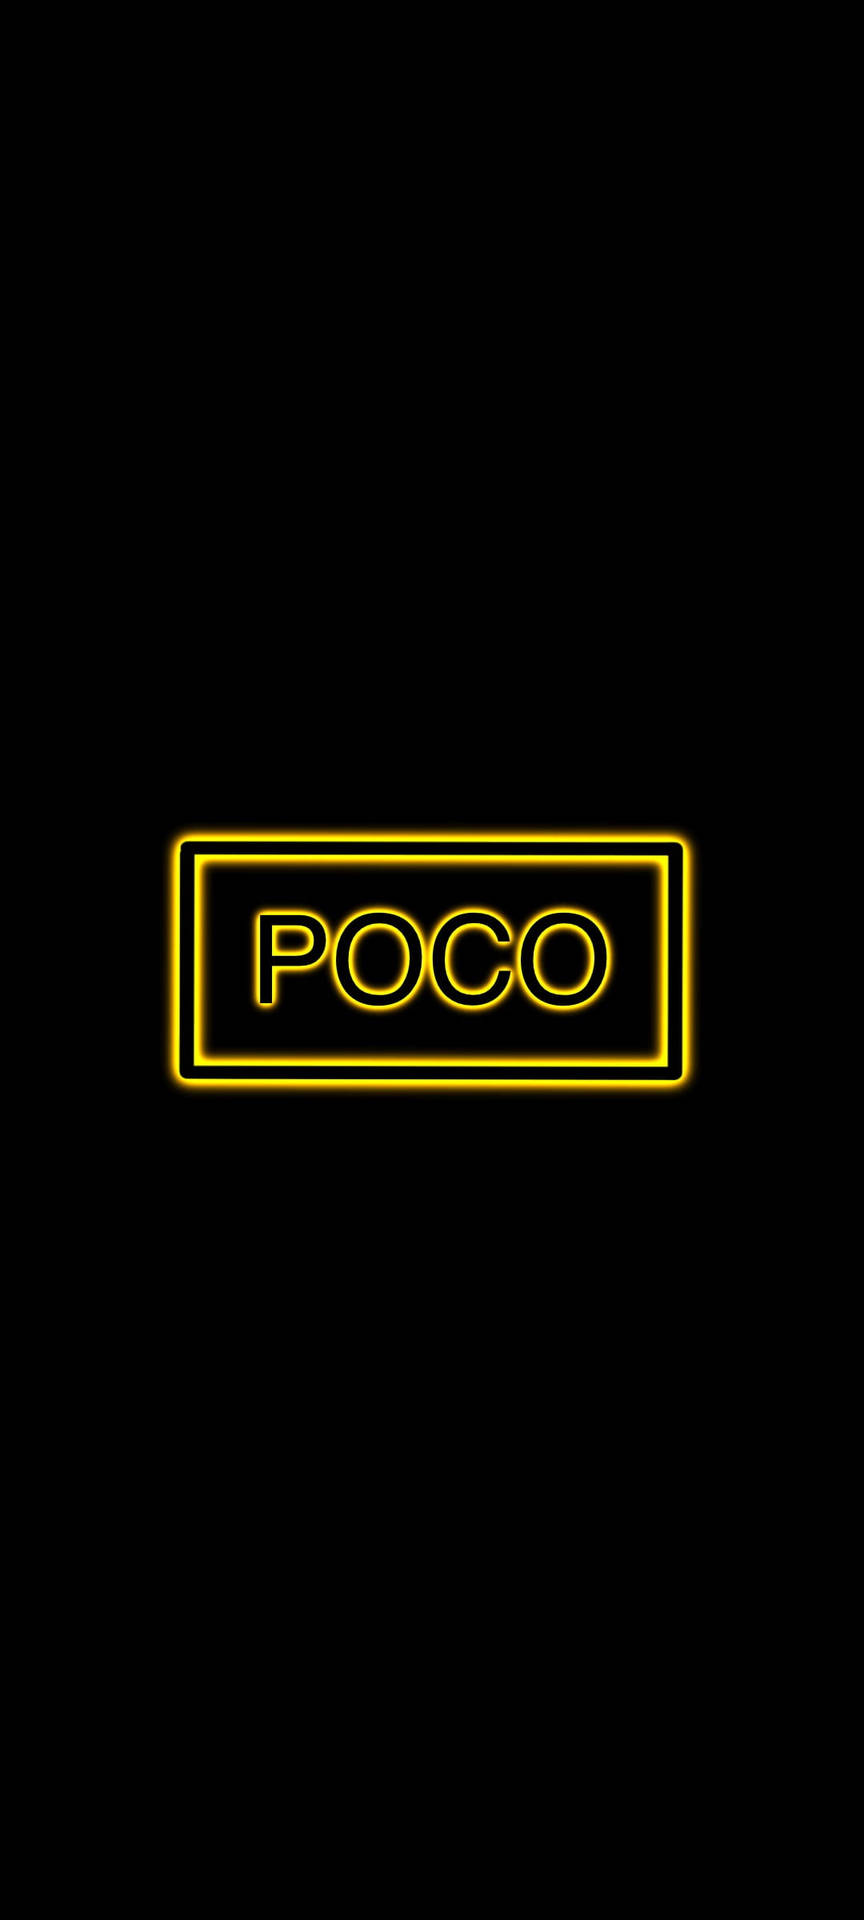 POCO X2 Yellow Font Wallpaper